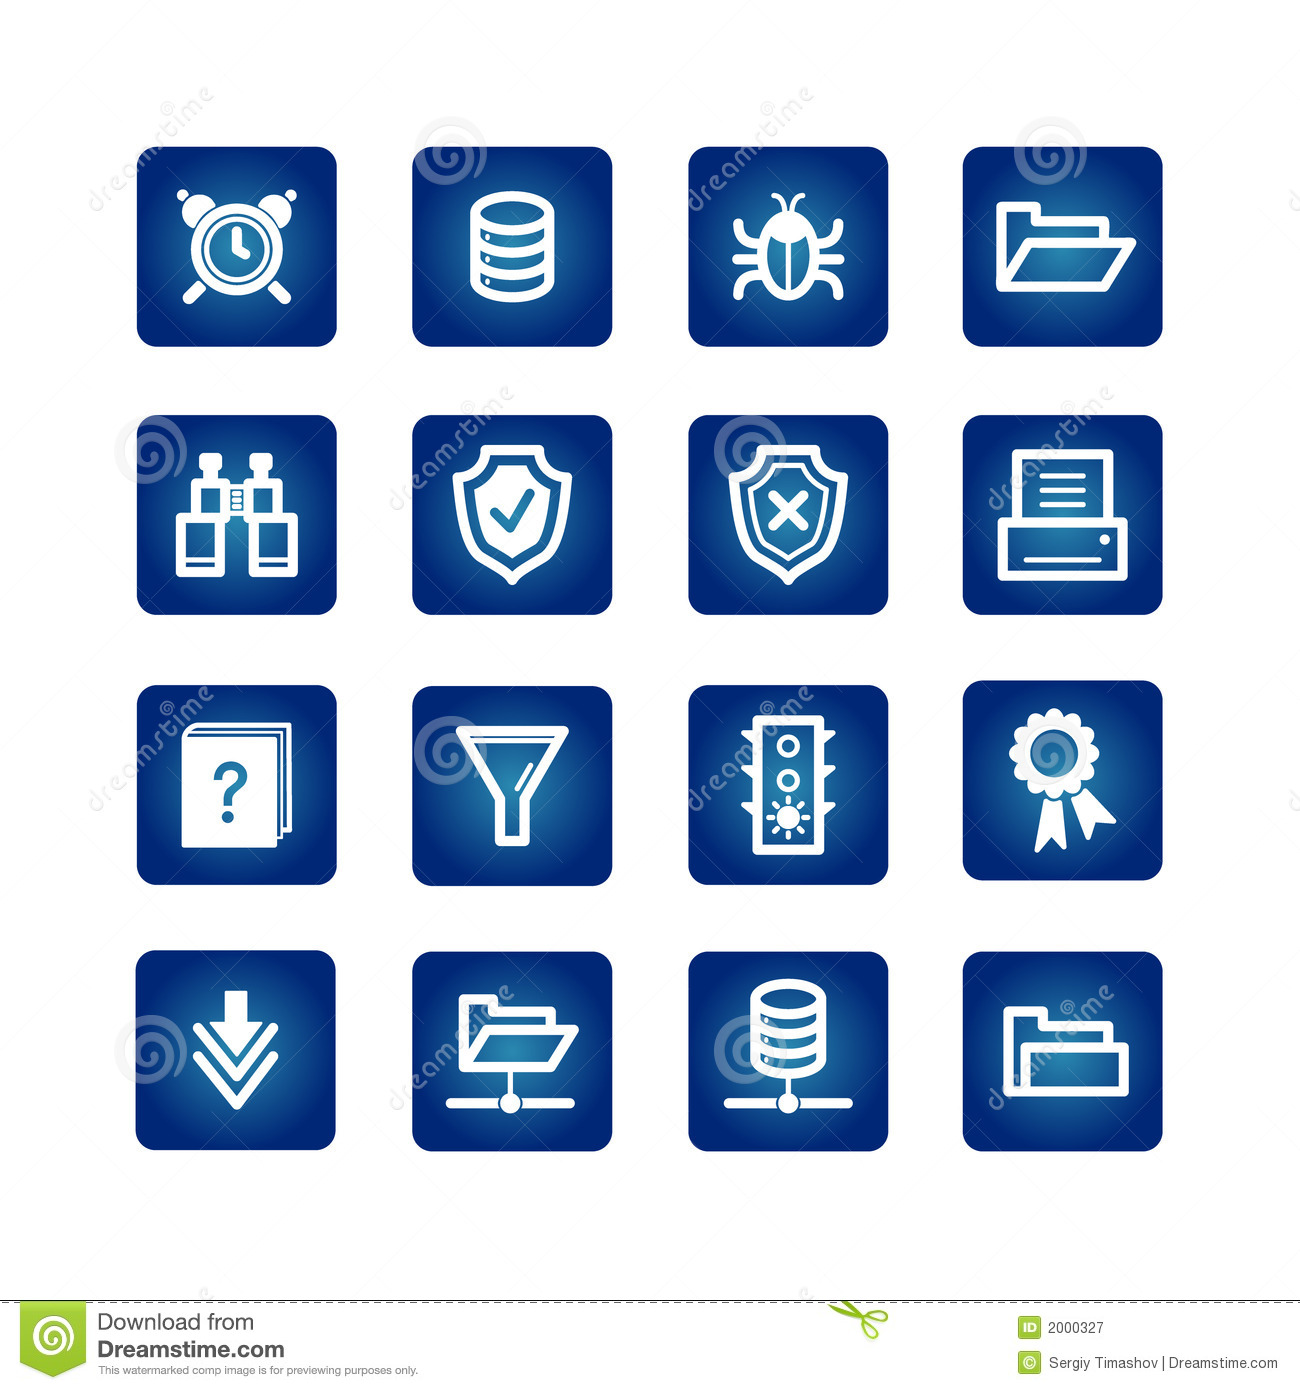 10 Server Folder Icon Images